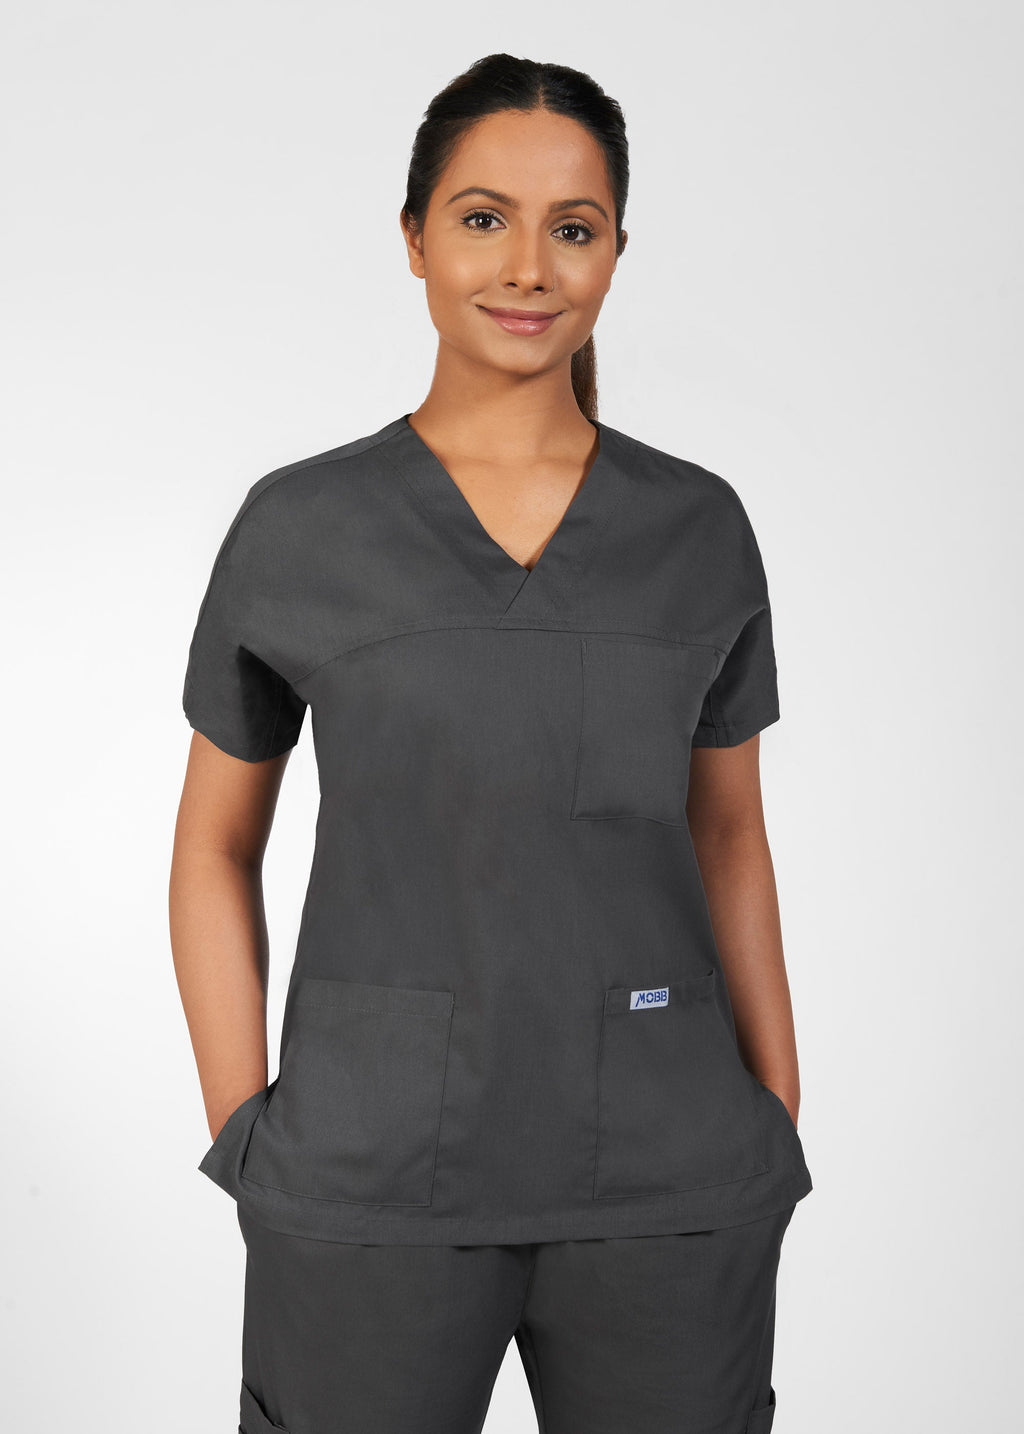 Nurse Scrubs & Uniforms on Sale  MOBB Medical Clearance – Dixie Uniforms  Ltd.